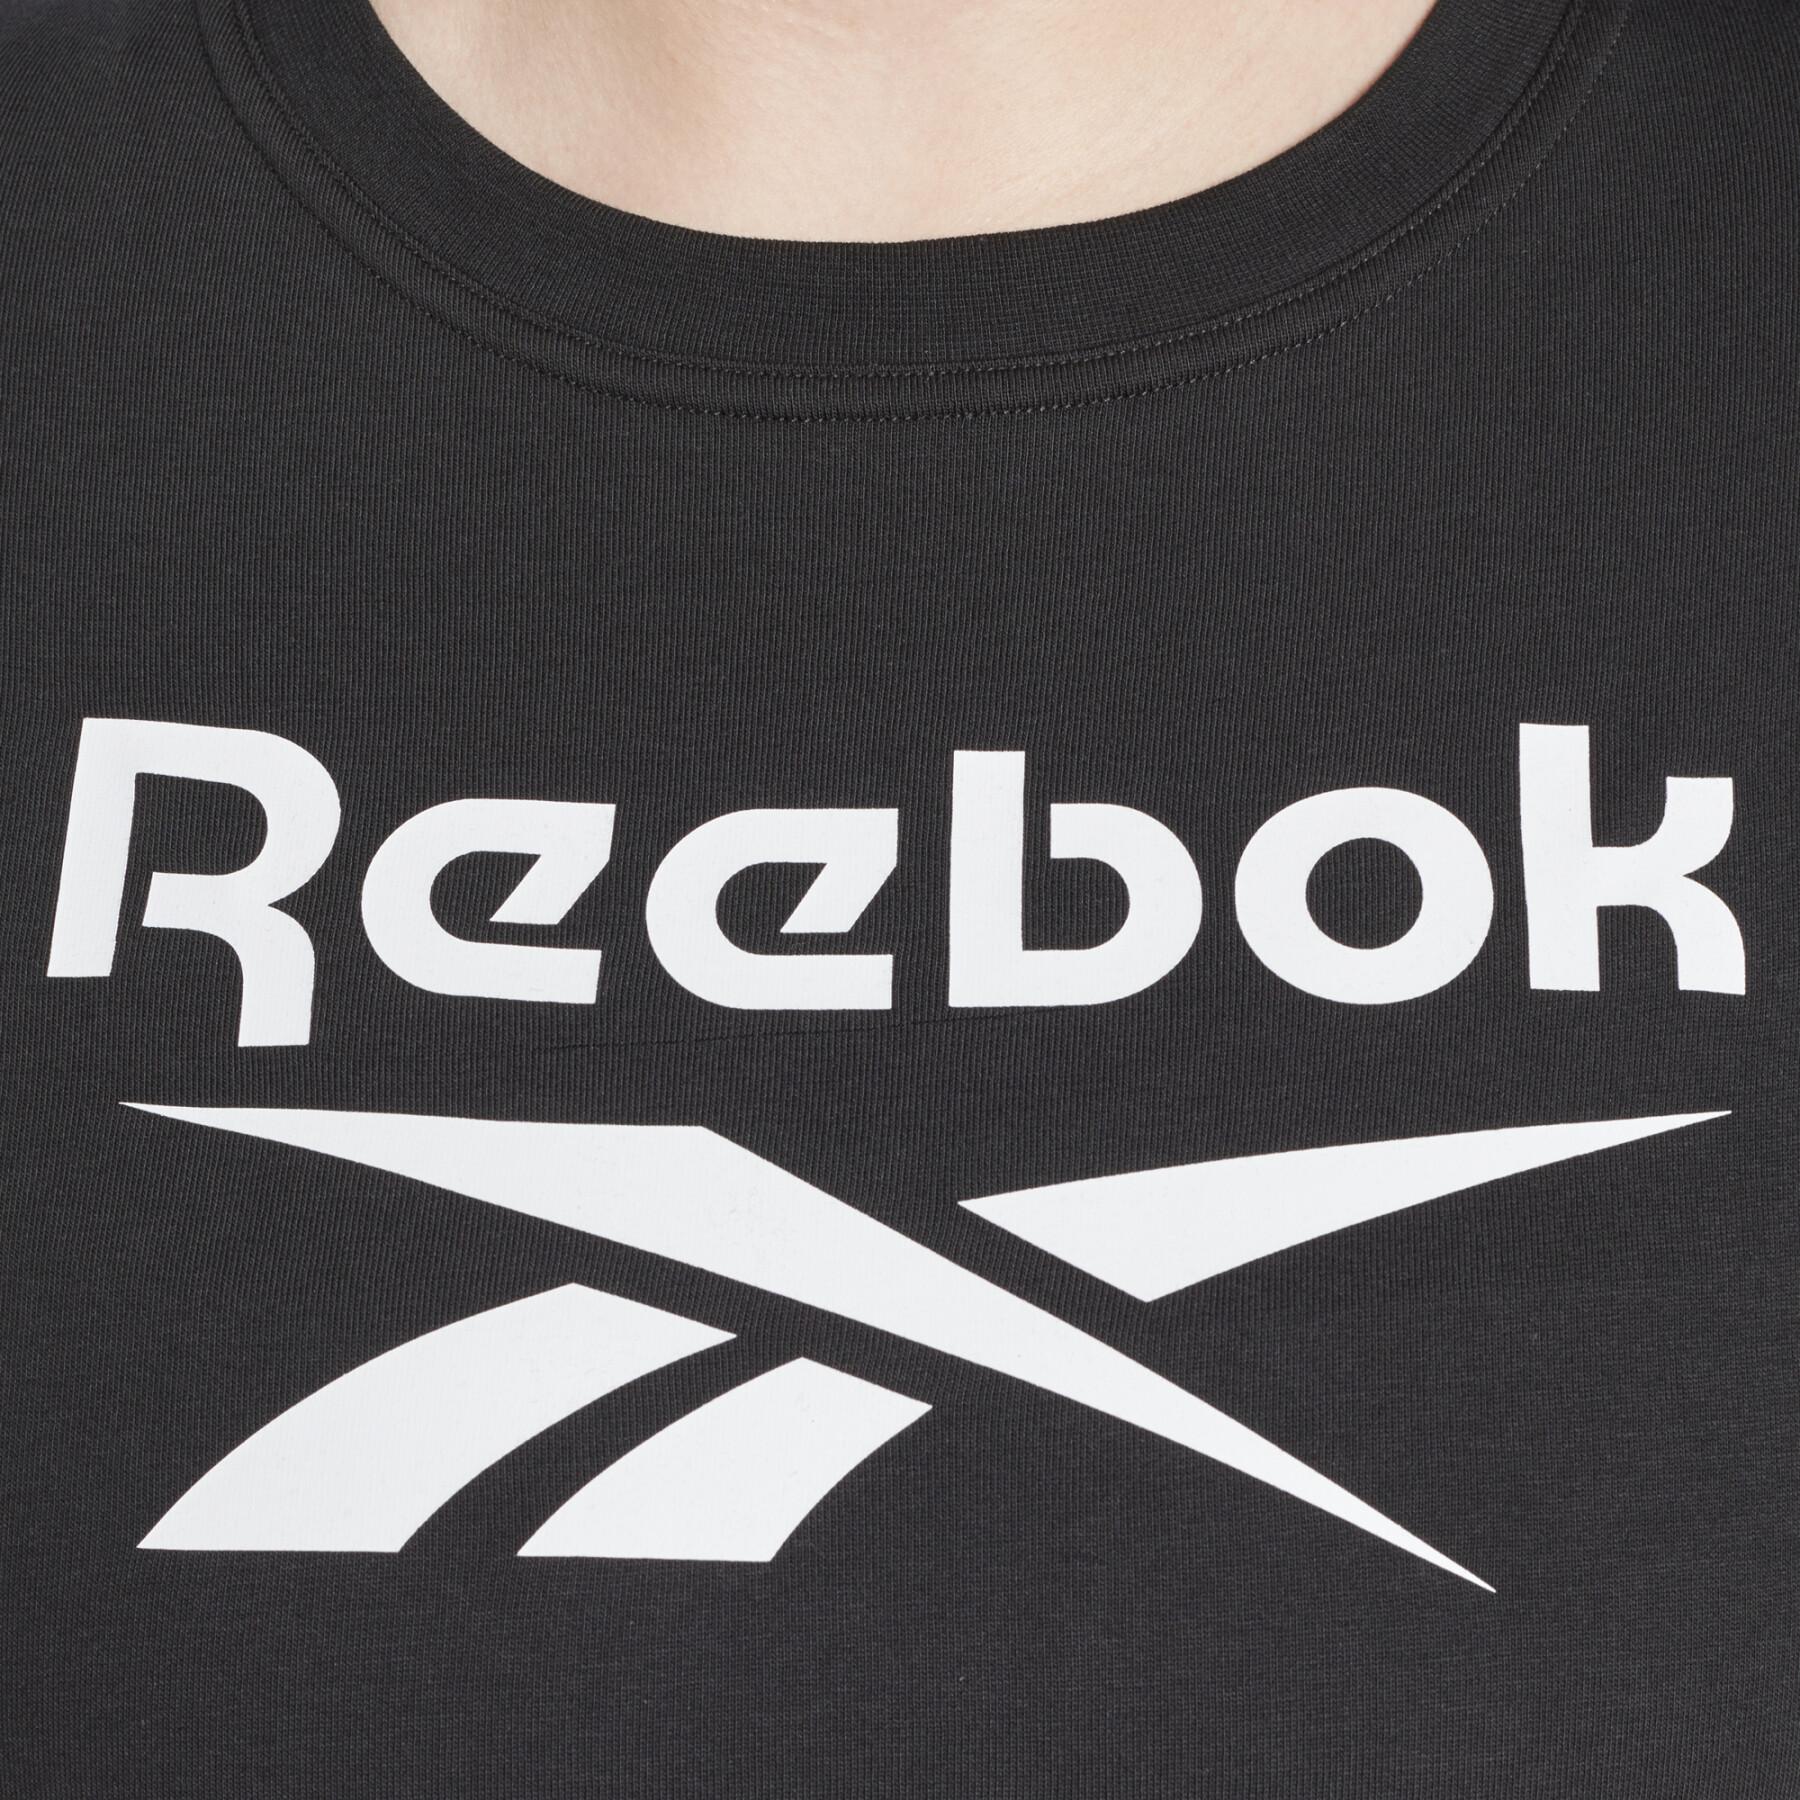 Women's T-shirt Reebok Identity Bl